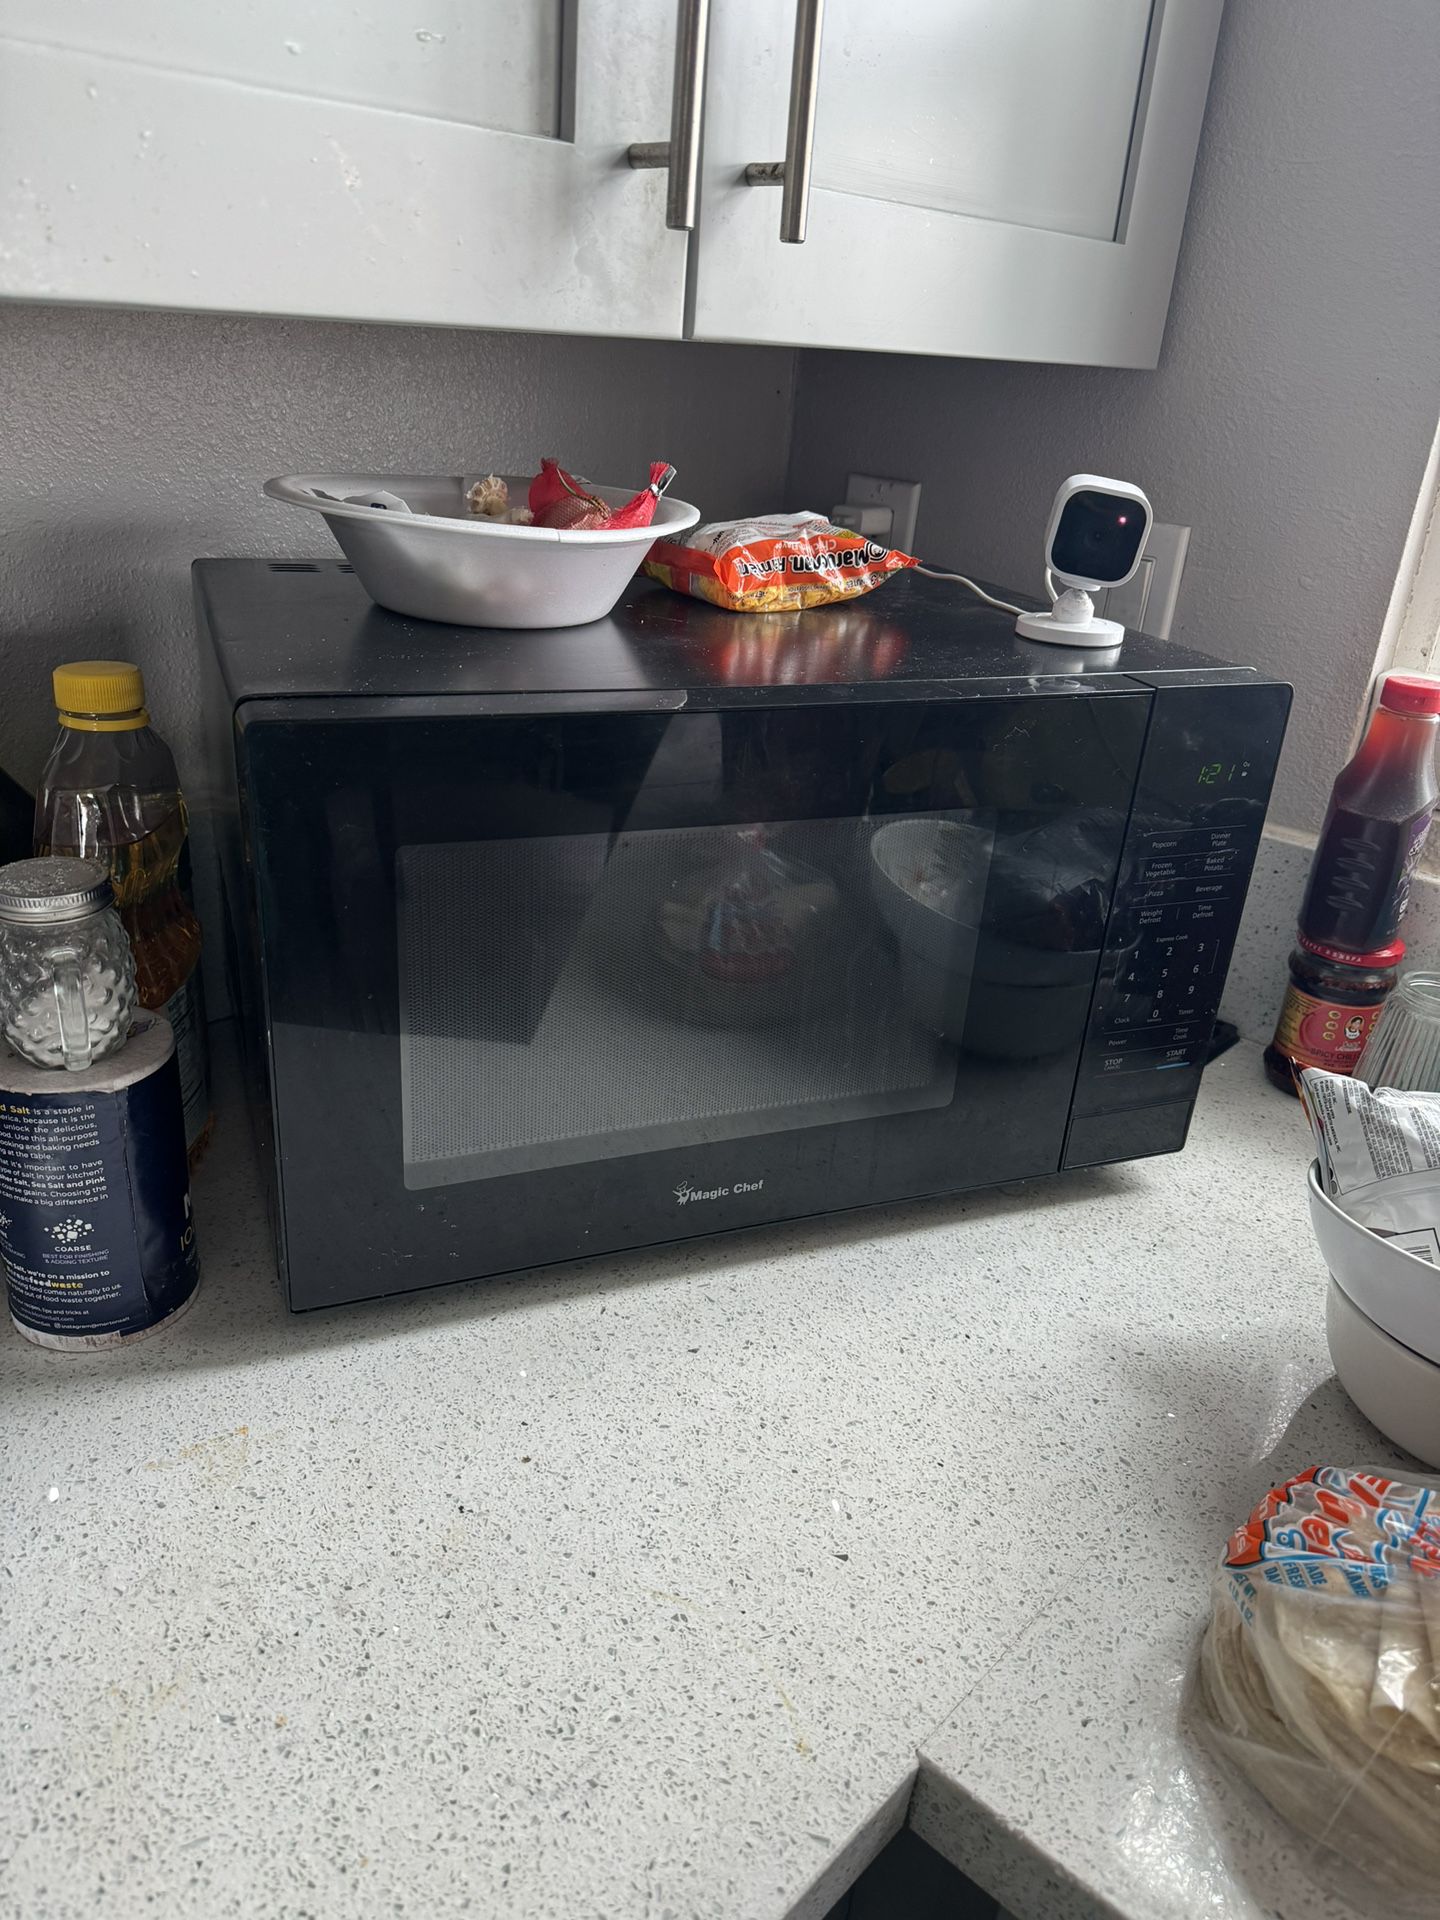 Magic Chest Microwave